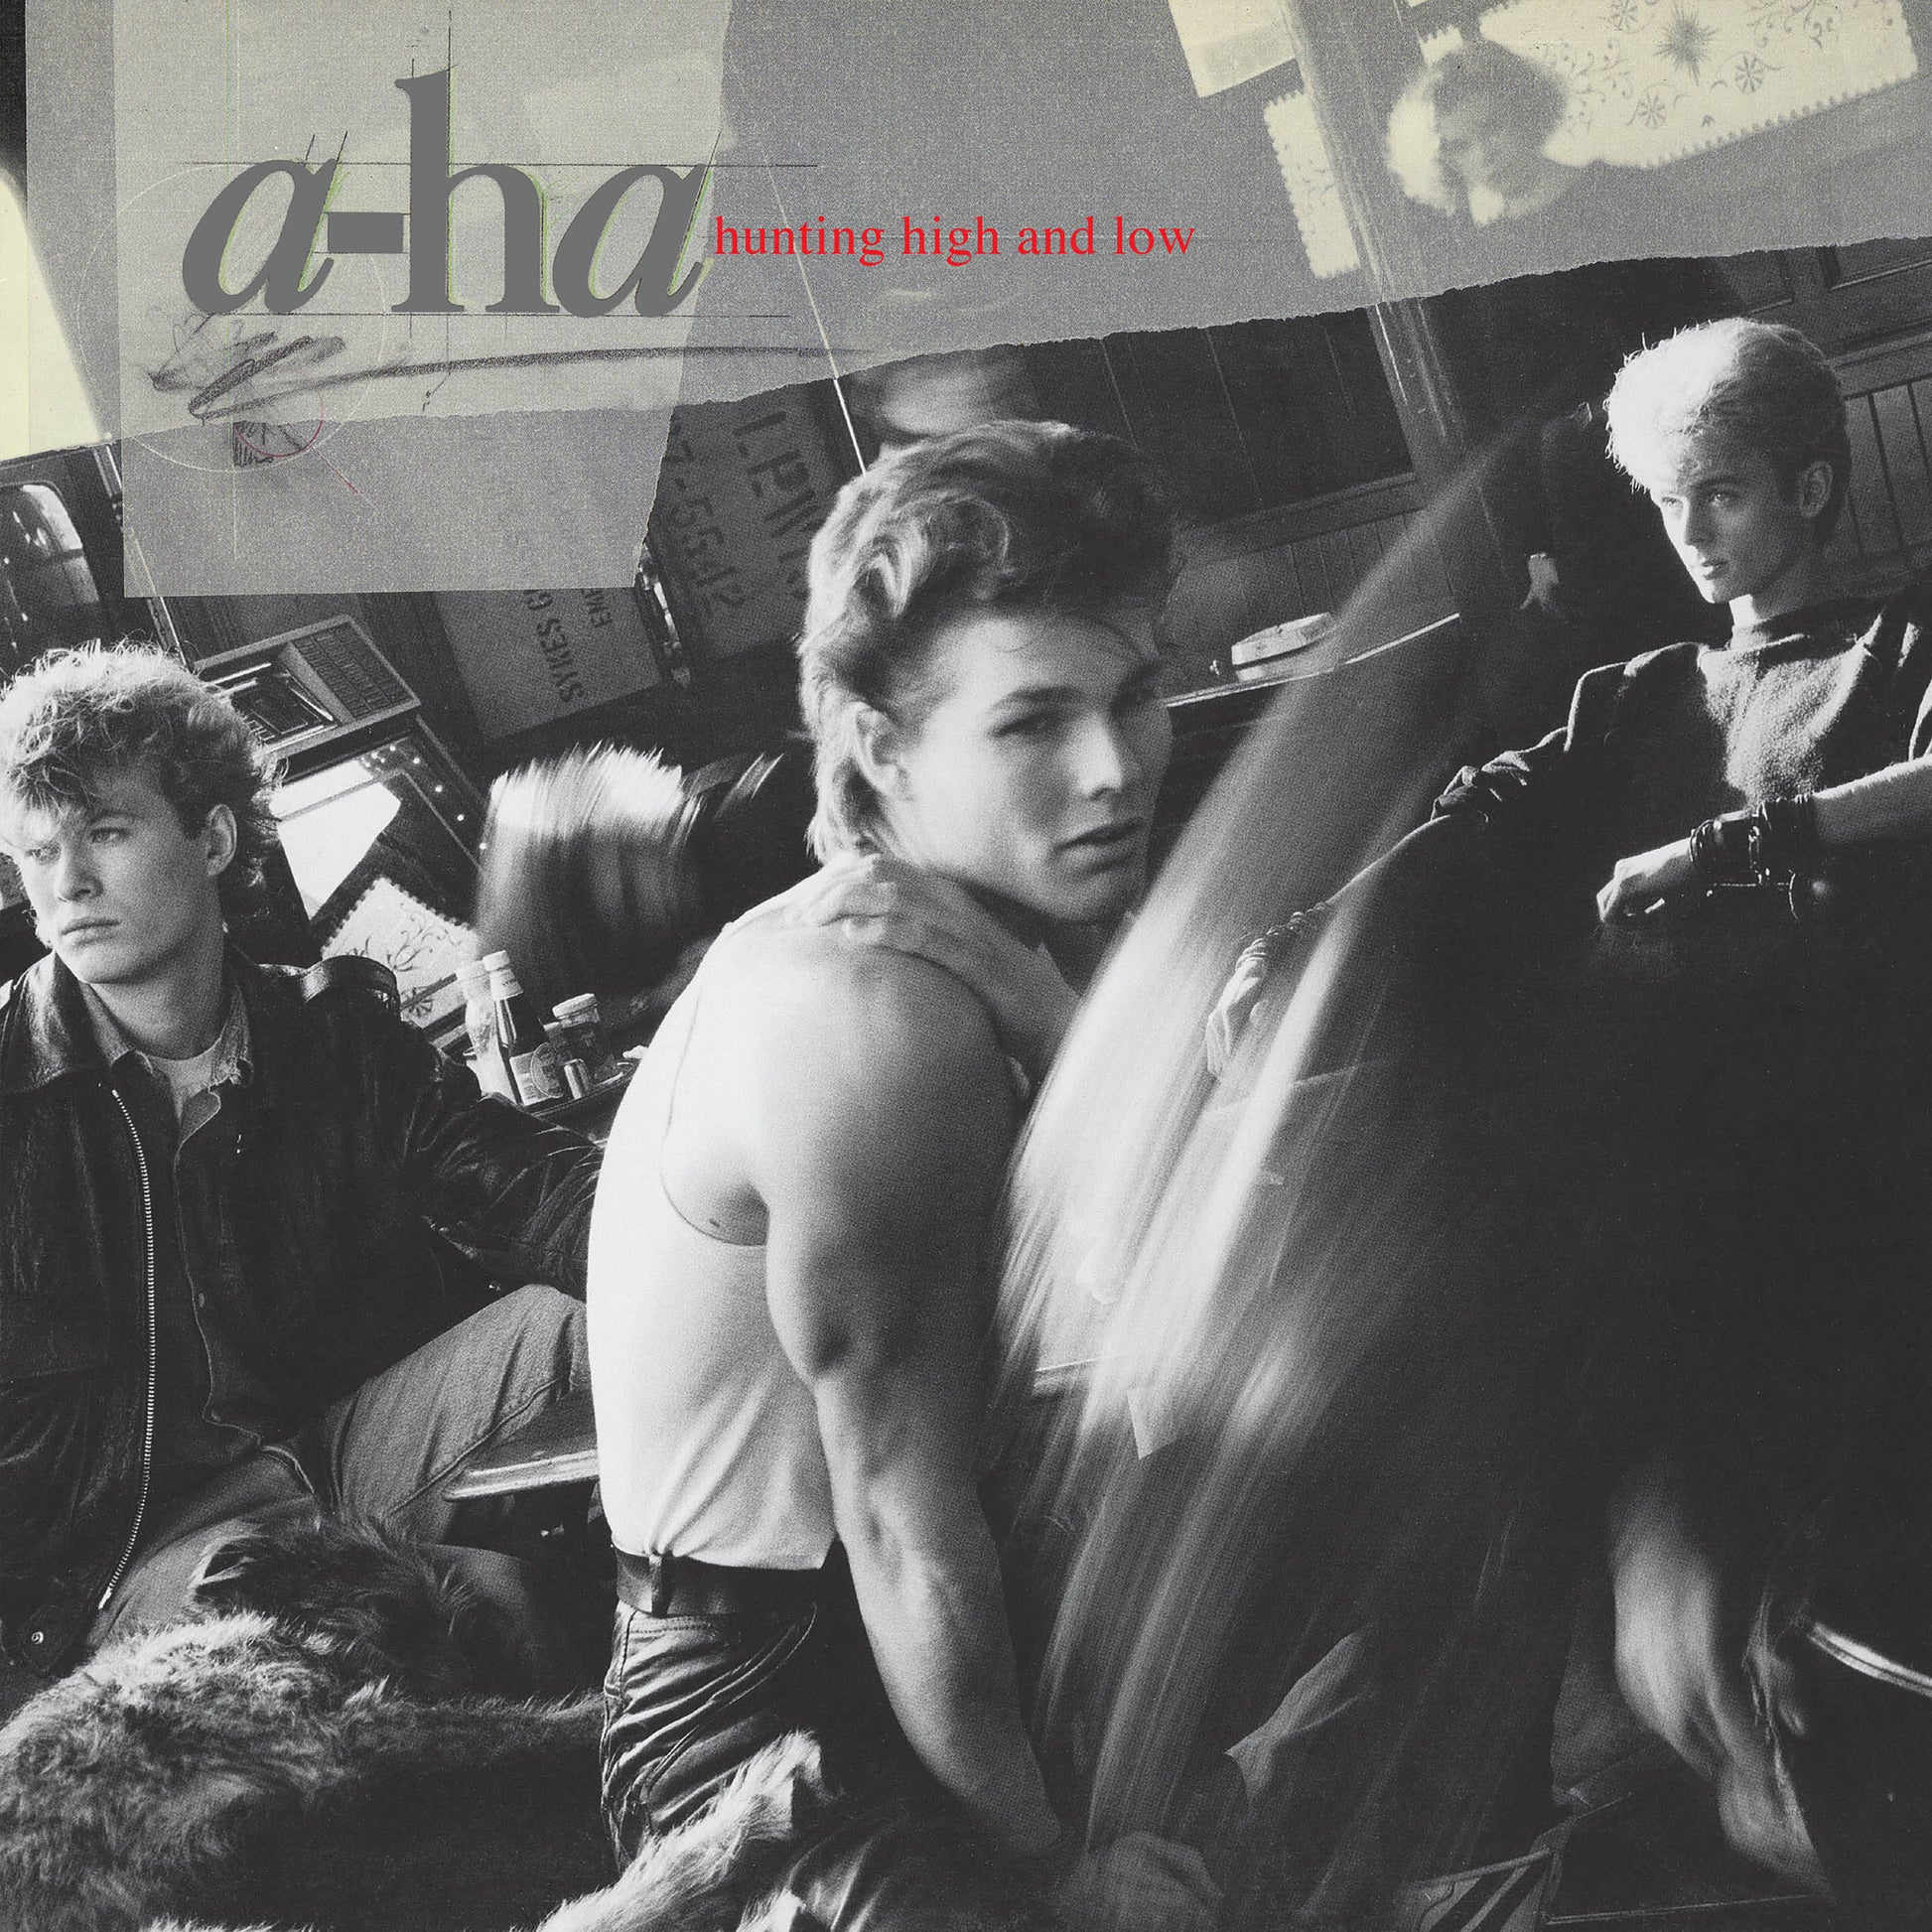 a-ha - Hunting High and Low (Rocktober Exclusive, Orange Vinyl) (LP) - Joco Records